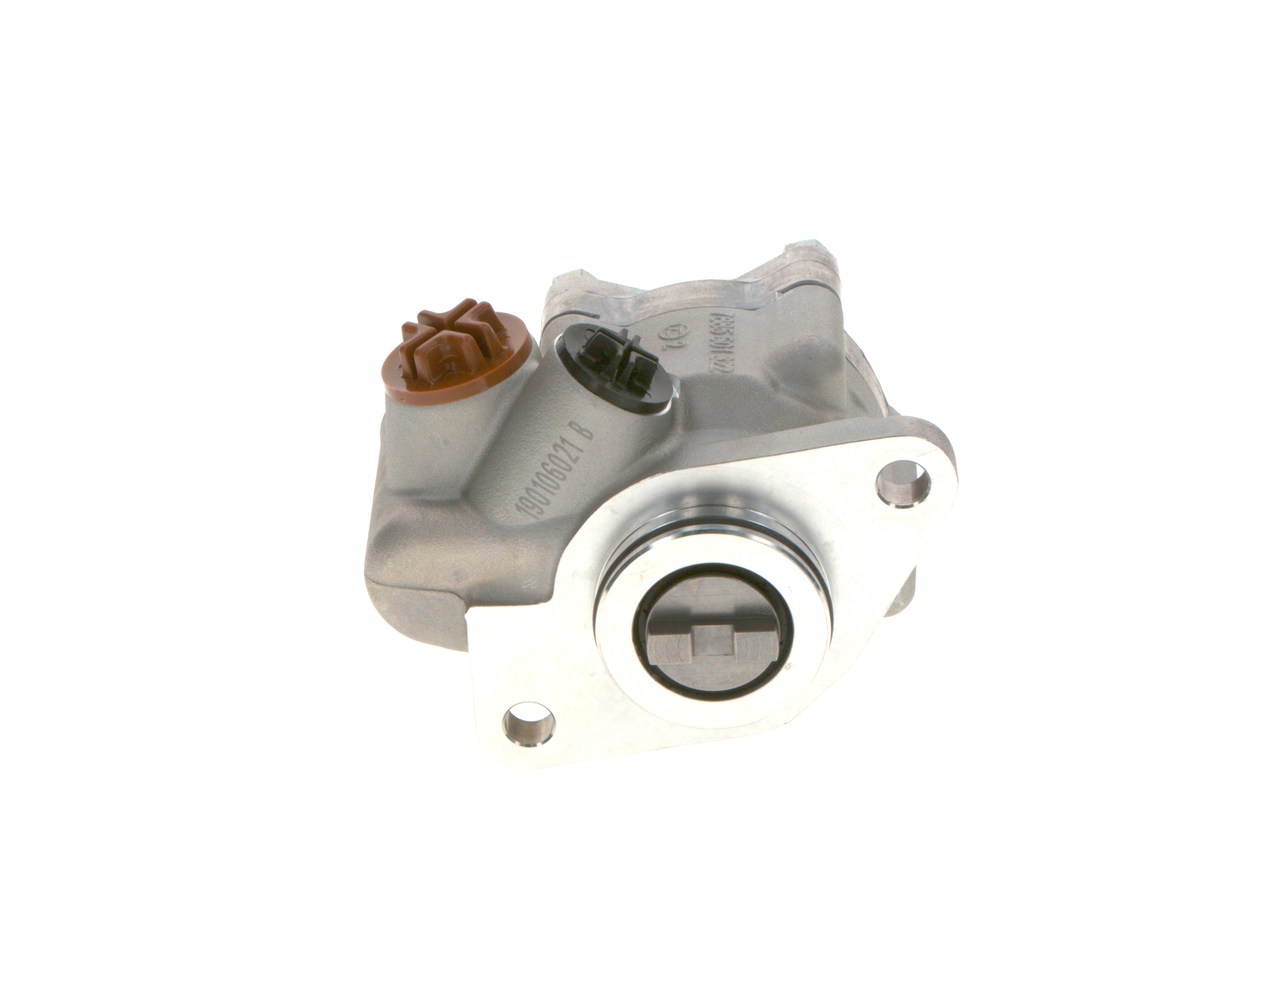 BOSCH K S01 000 341 Power steering pump Hydraulic, 120 bar, Pressure-limiting Valve, M 16 x 1,5, Vane Pump, Anticlockwise rotation